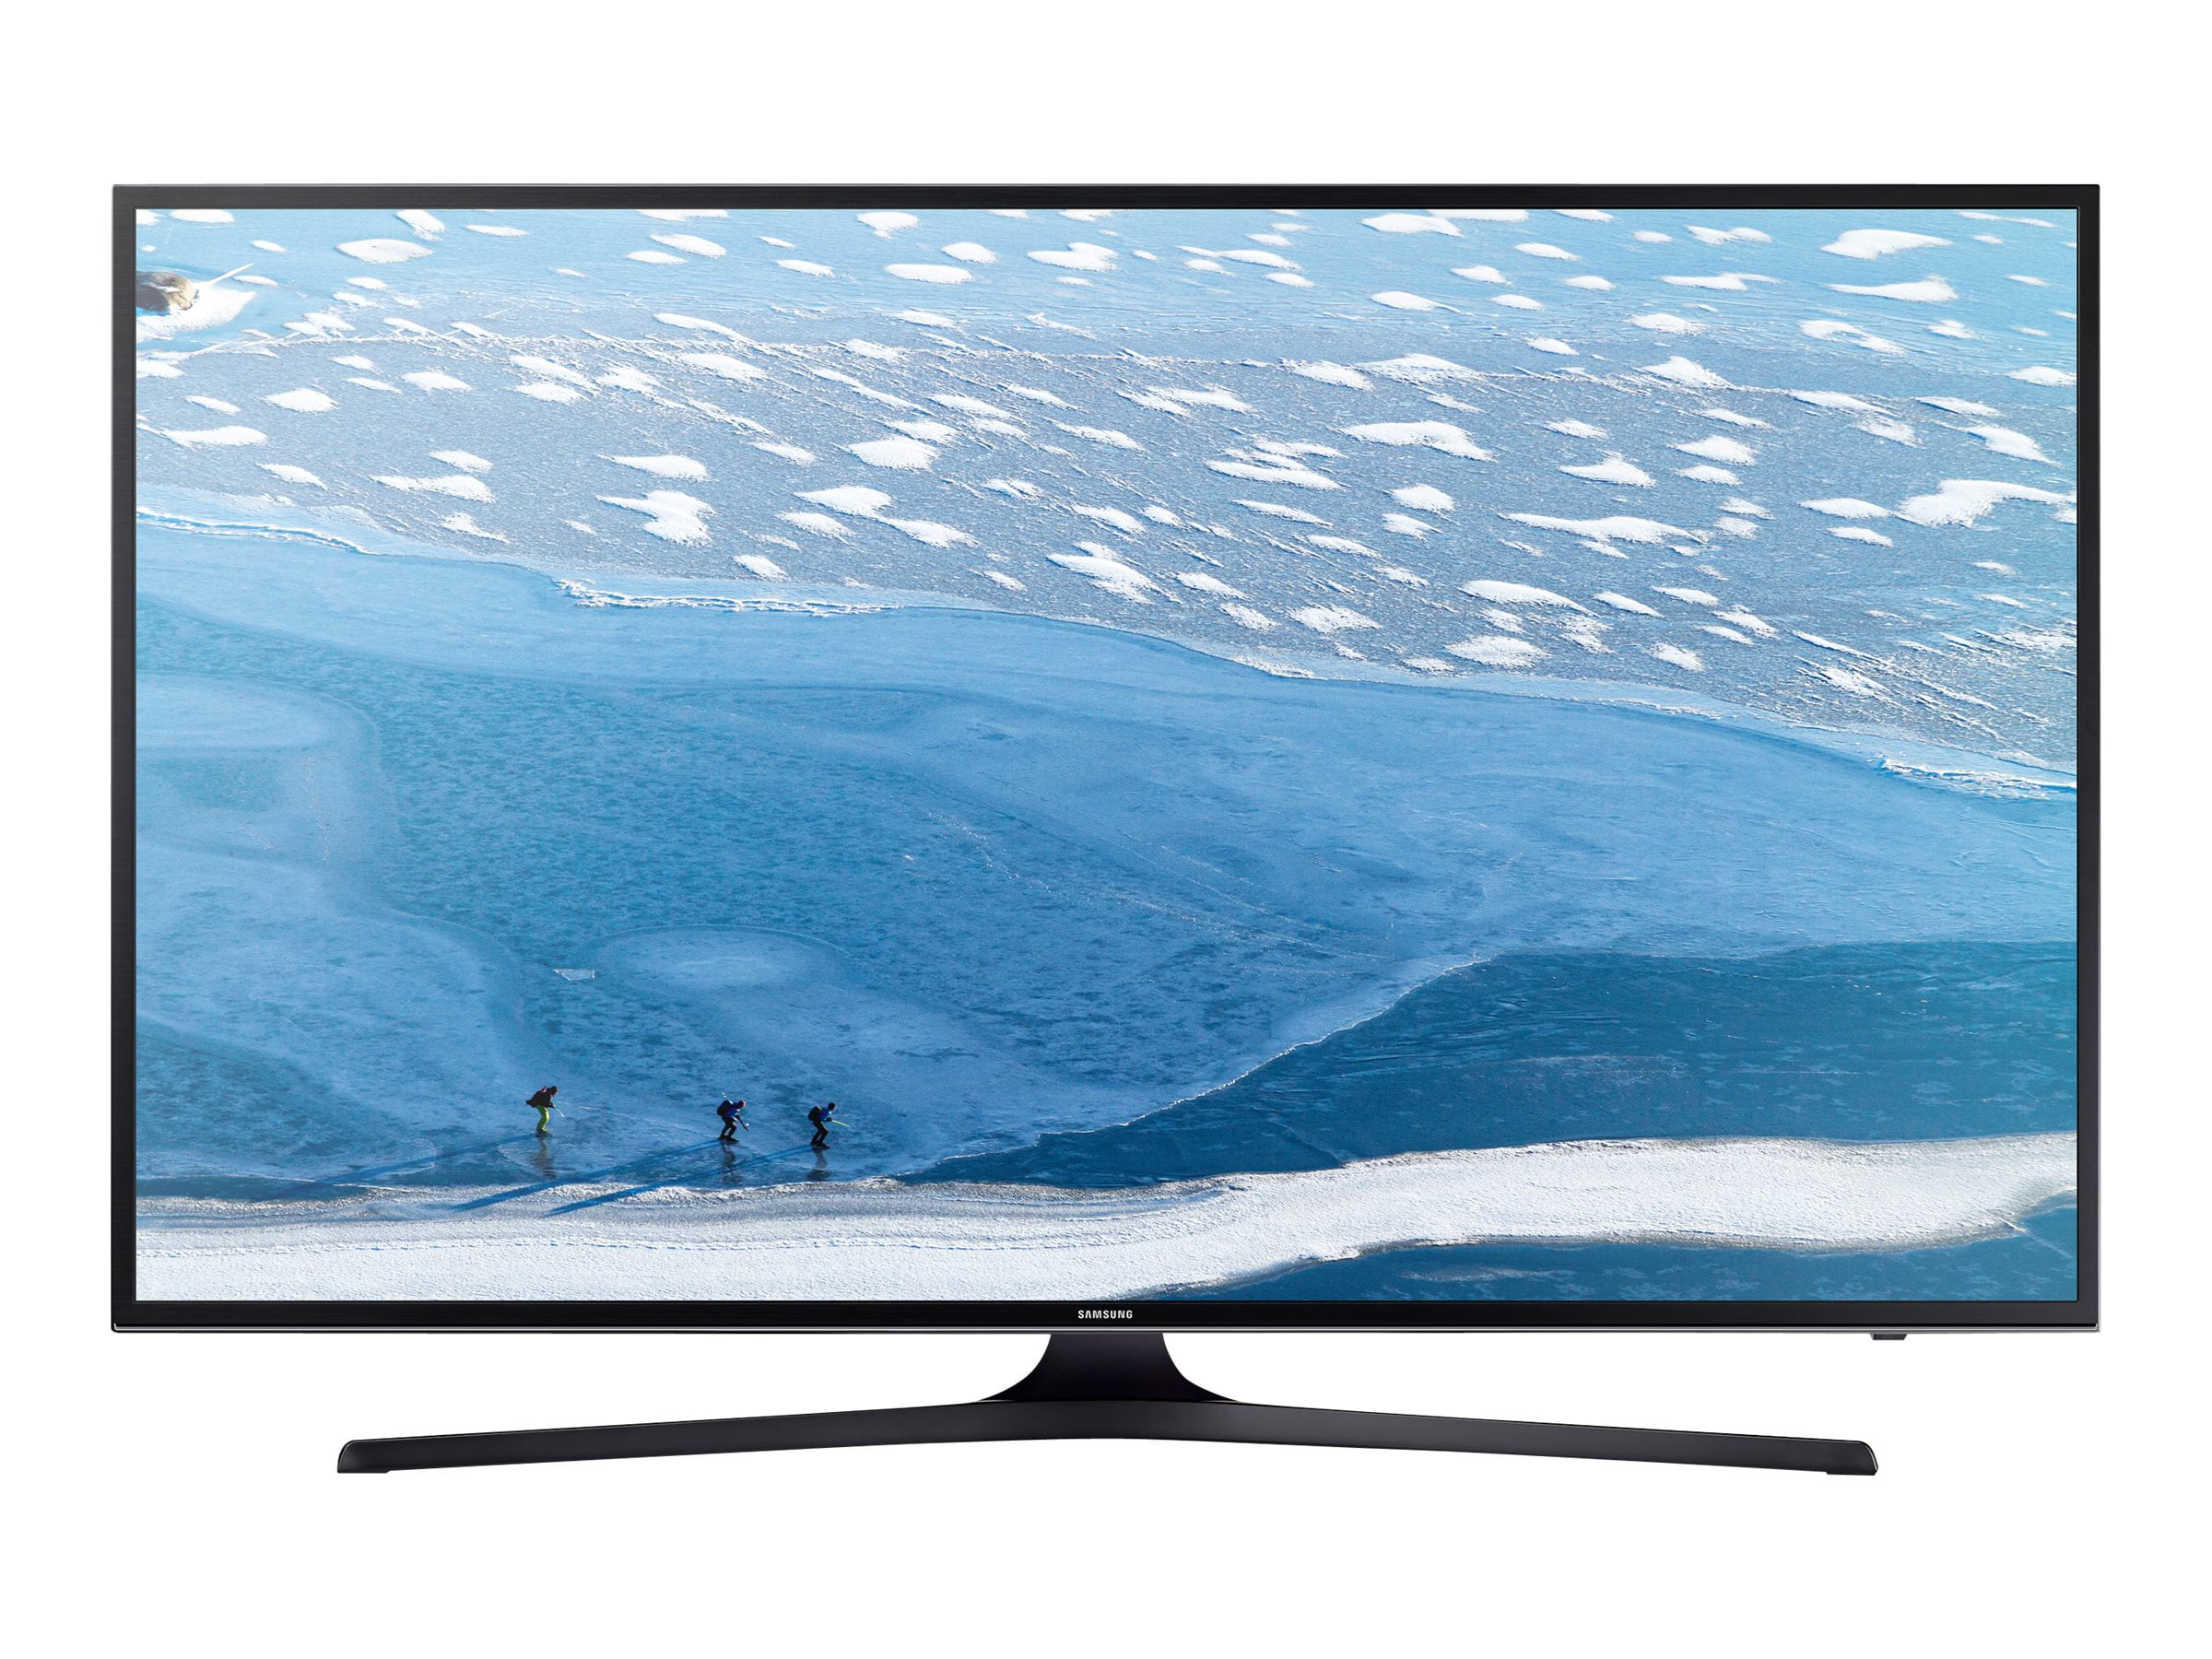 Samsung 50" class 4k (2160p) smart led tv (4k x 2k) (un50ku6300